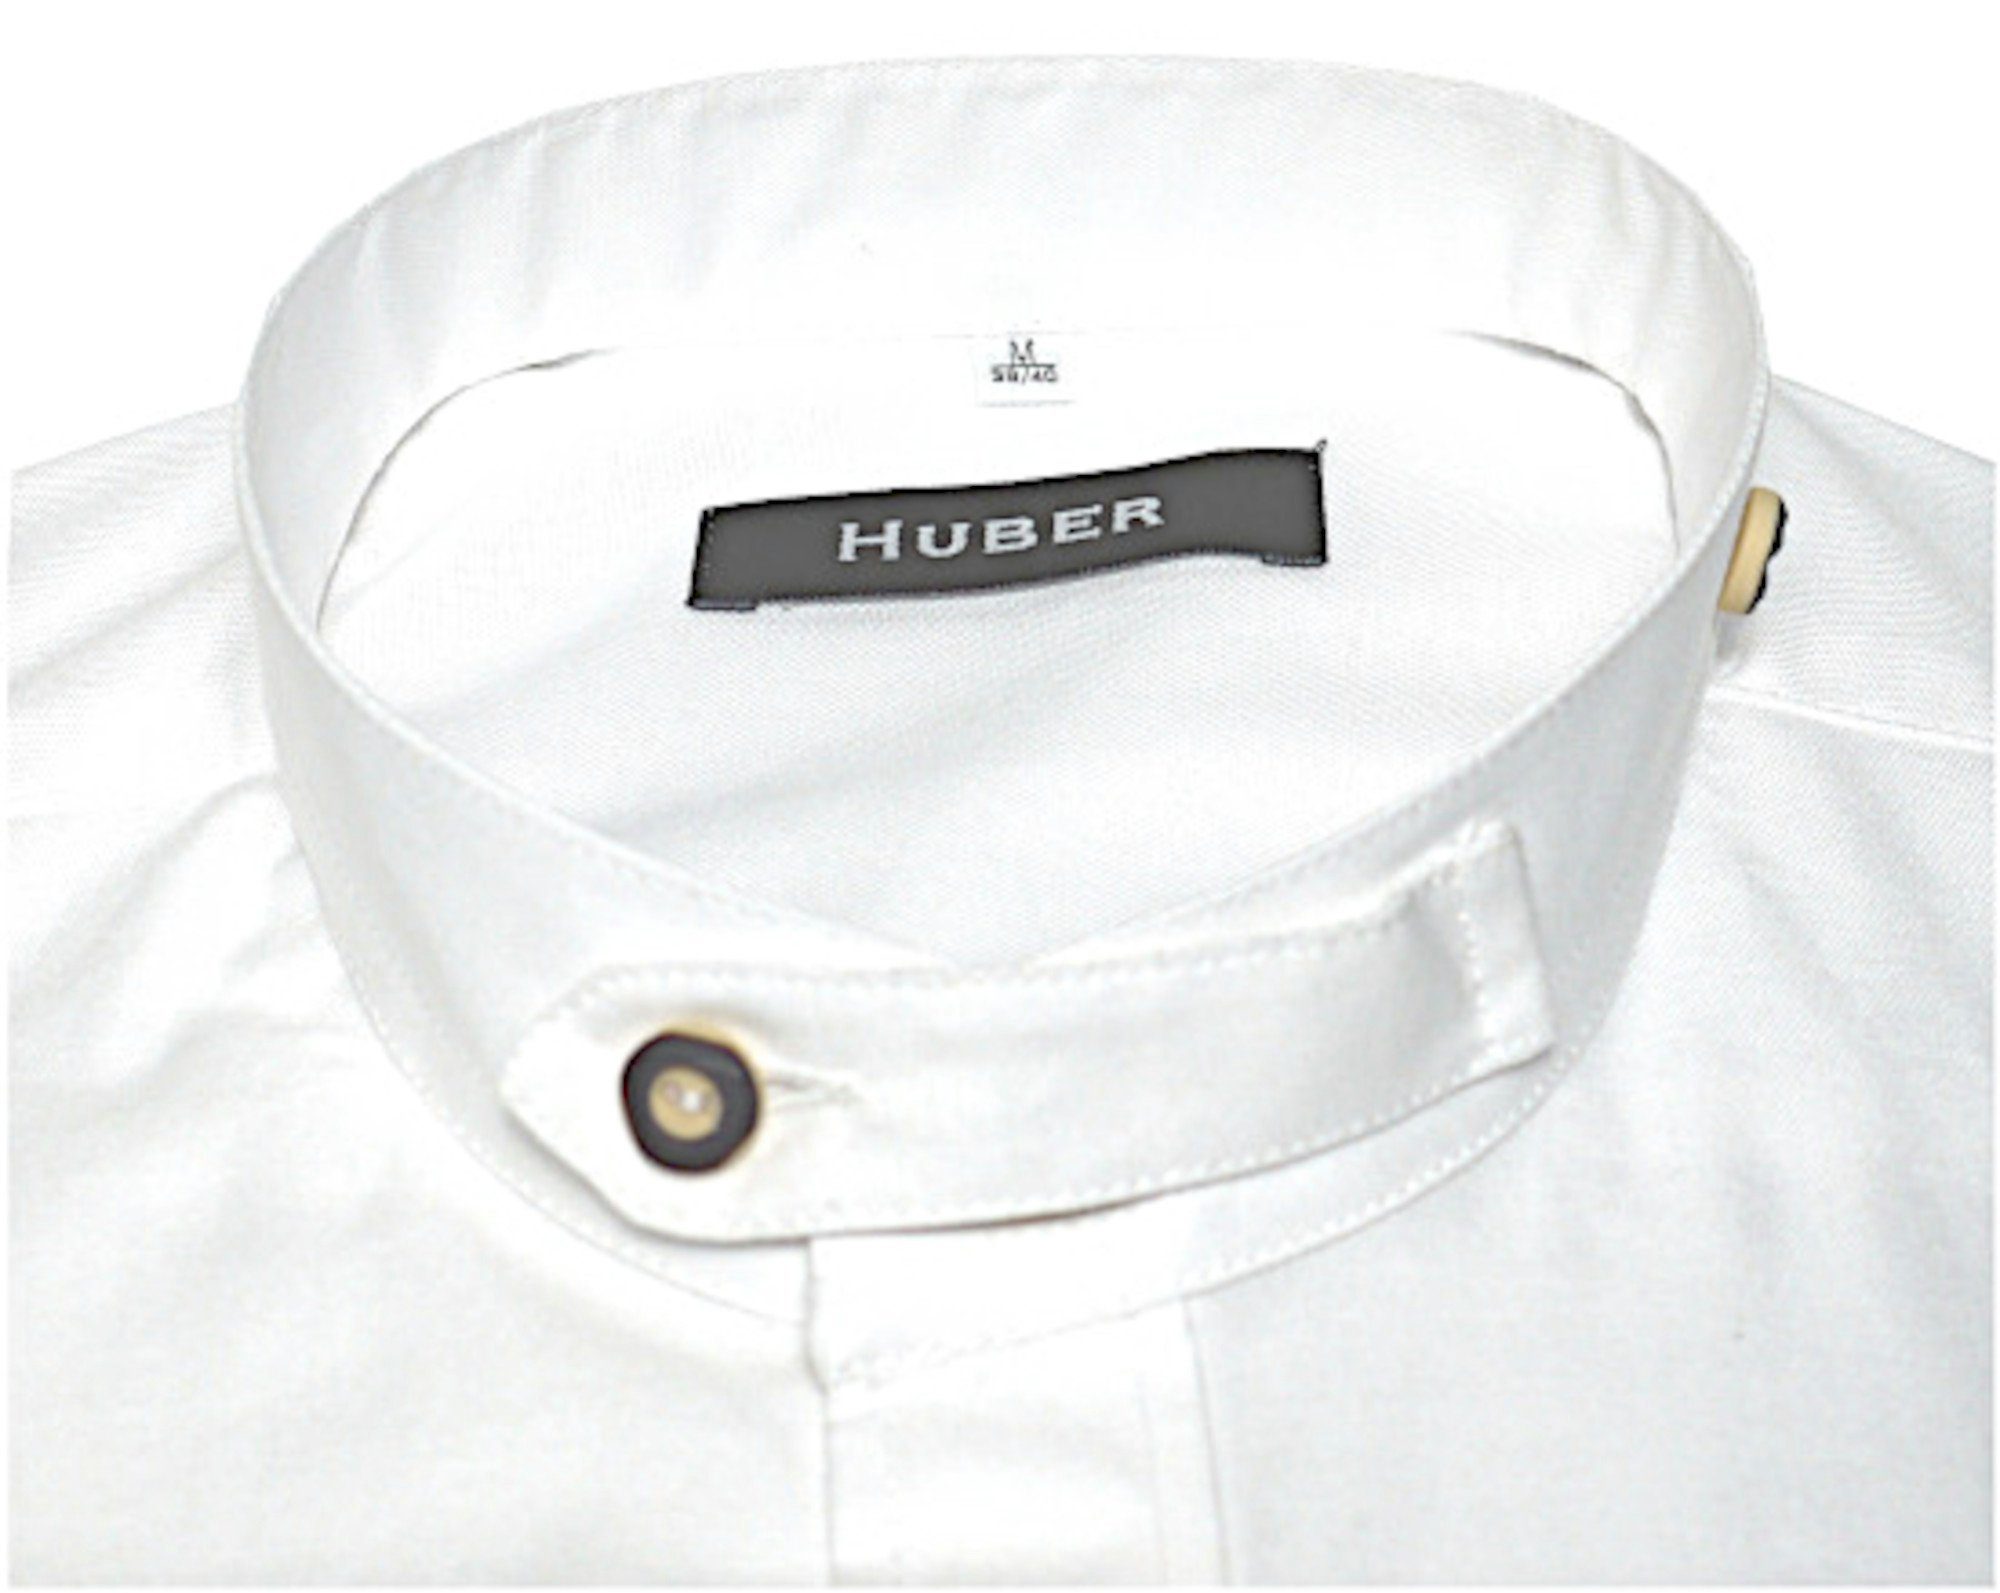 Trachtenhemd Hemden HU-0706 Huber Stehkragen Regular/Comfort-gerader Schnitt